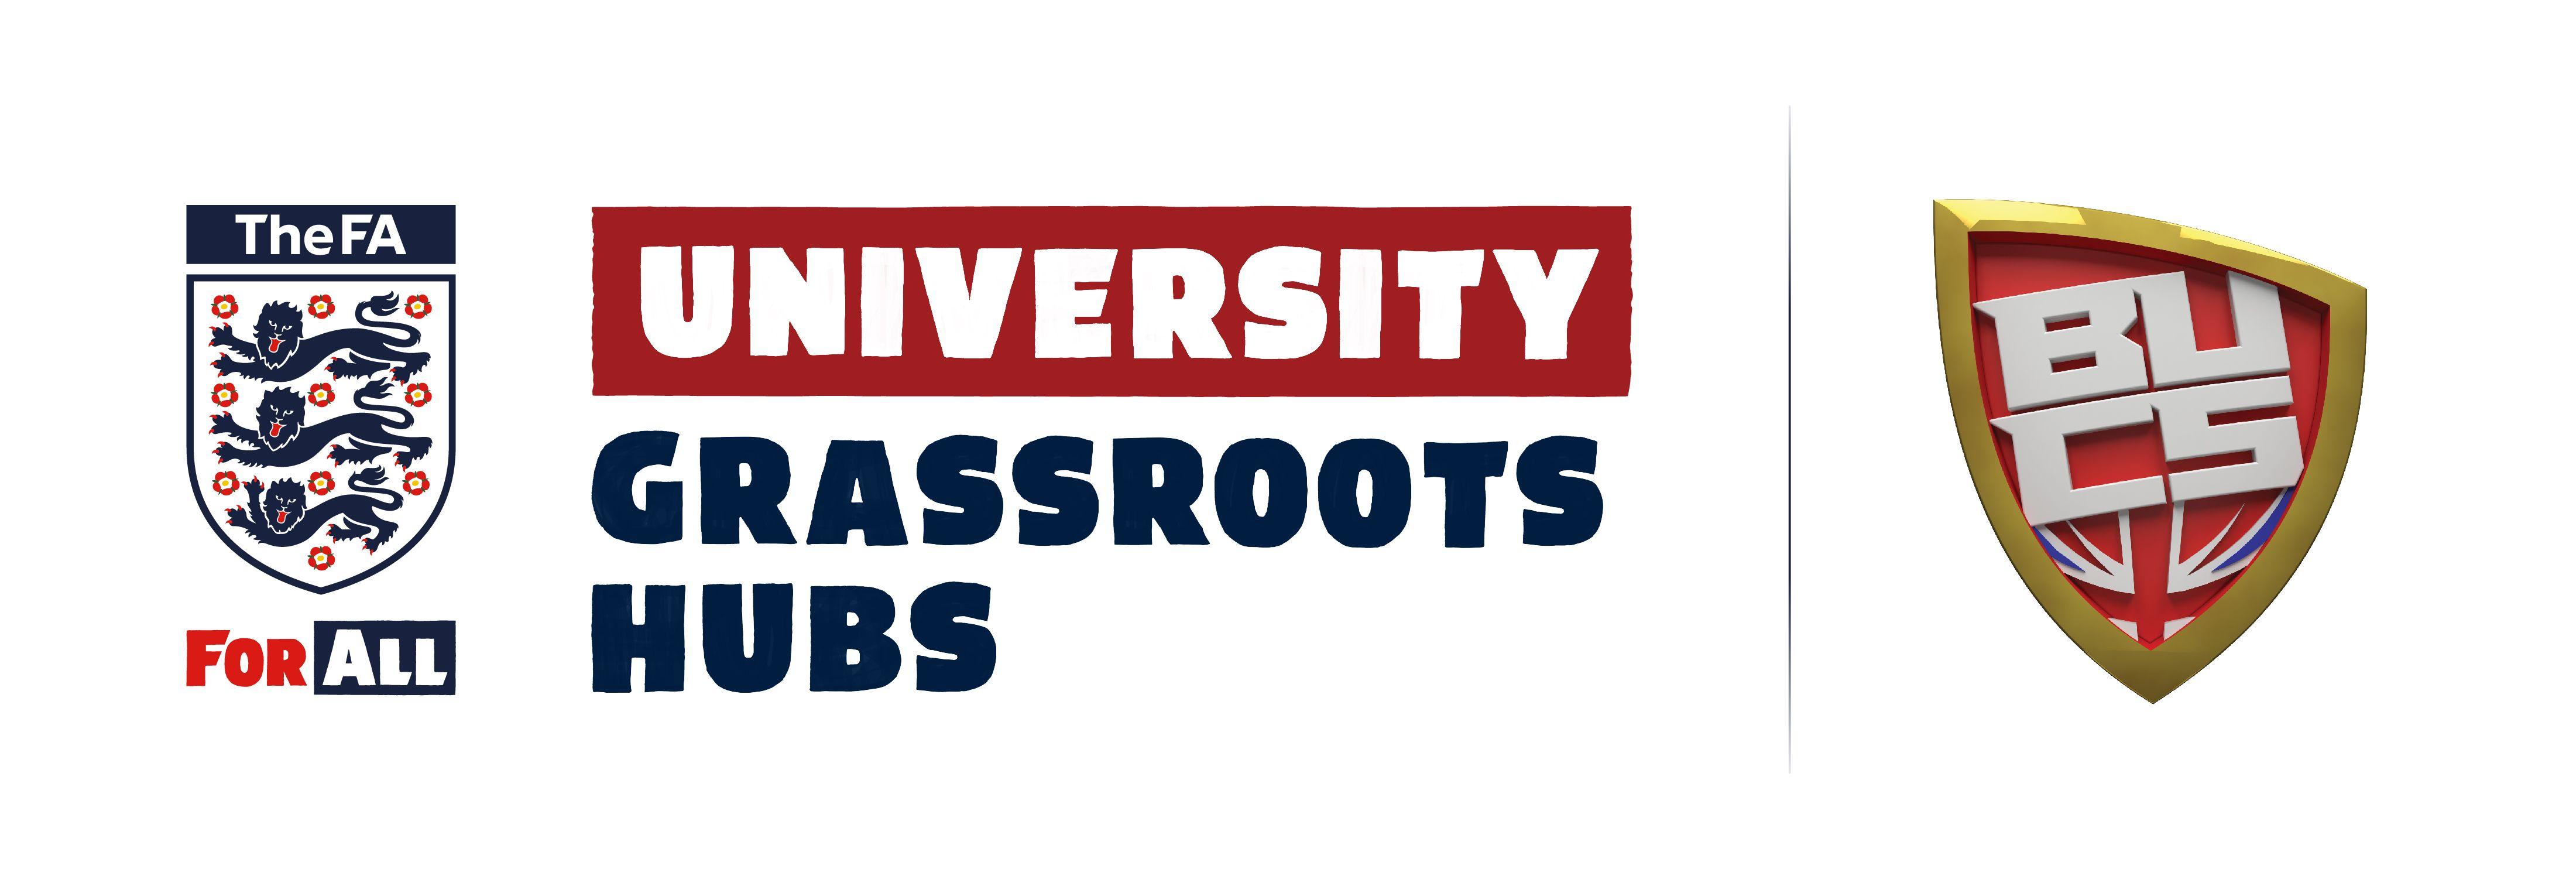 Bucs Logo - University Grassroots Hubs with FA logo & BUCS logo - Sport and ...